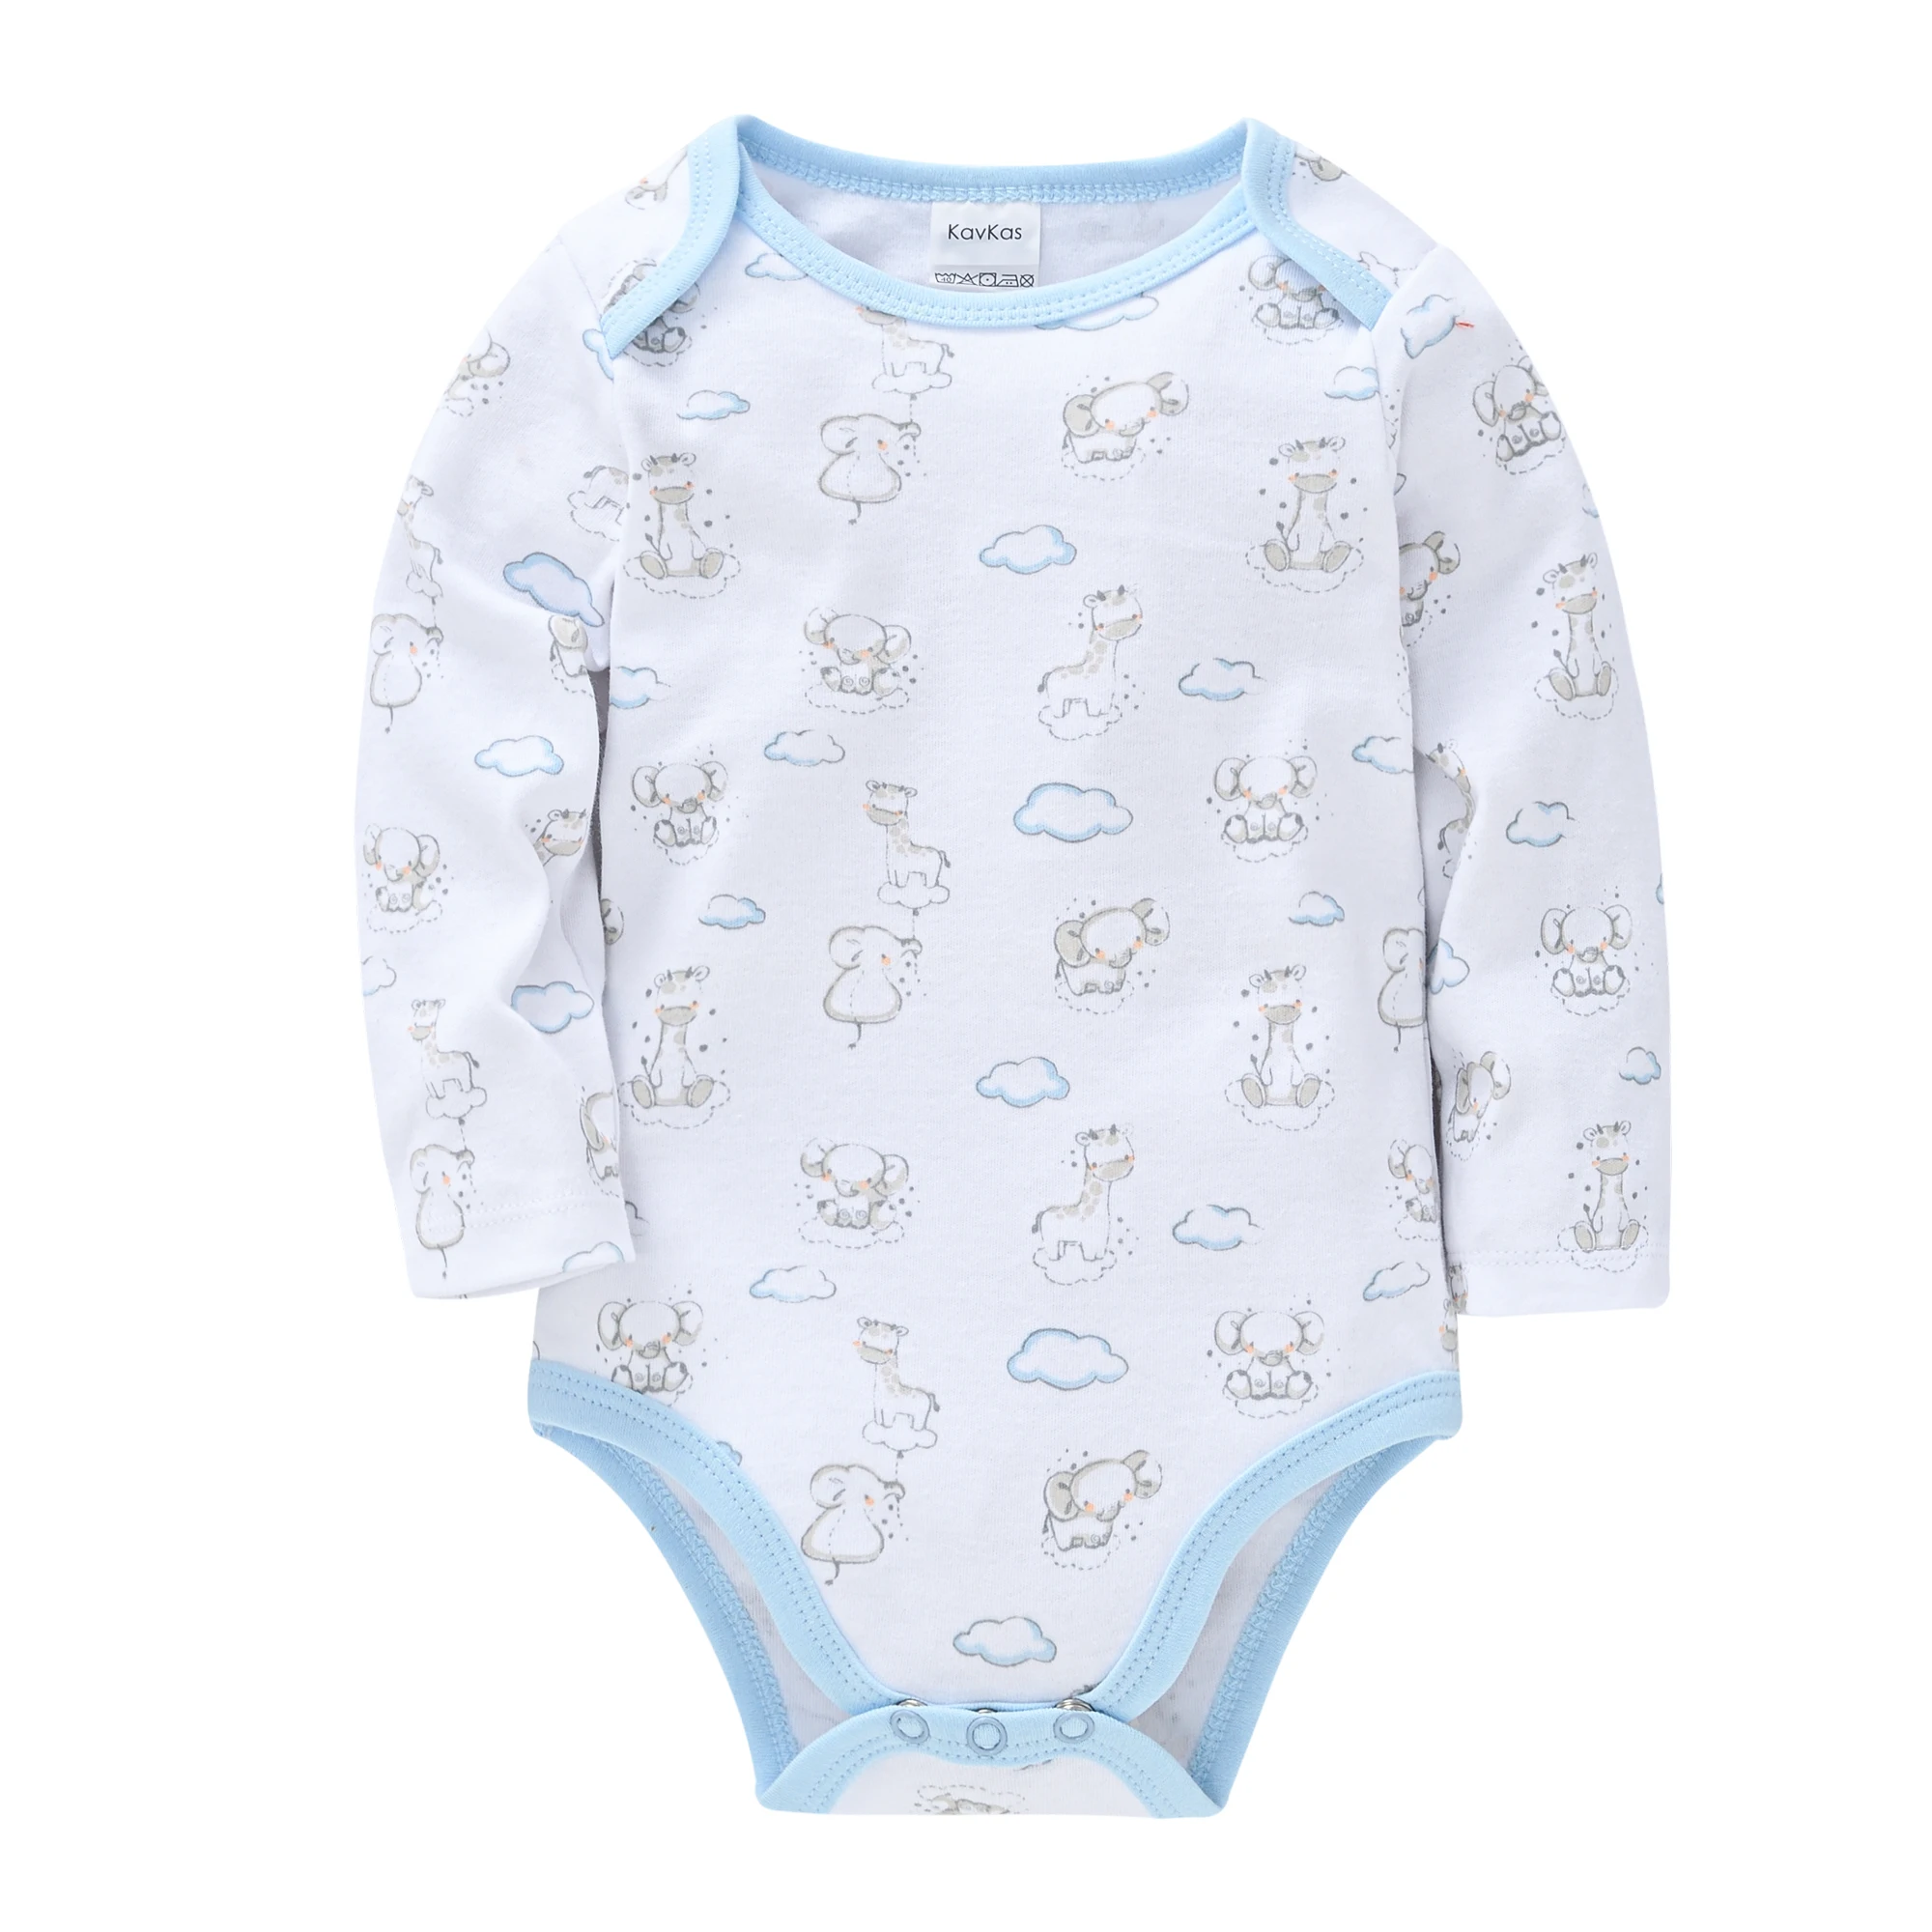 

Honeyzone Baby Girl Clothes Infant Boys Bodysuits Cartoon Printing For Babies Children Shorts Rompers Sleepwear Newborn Onesie